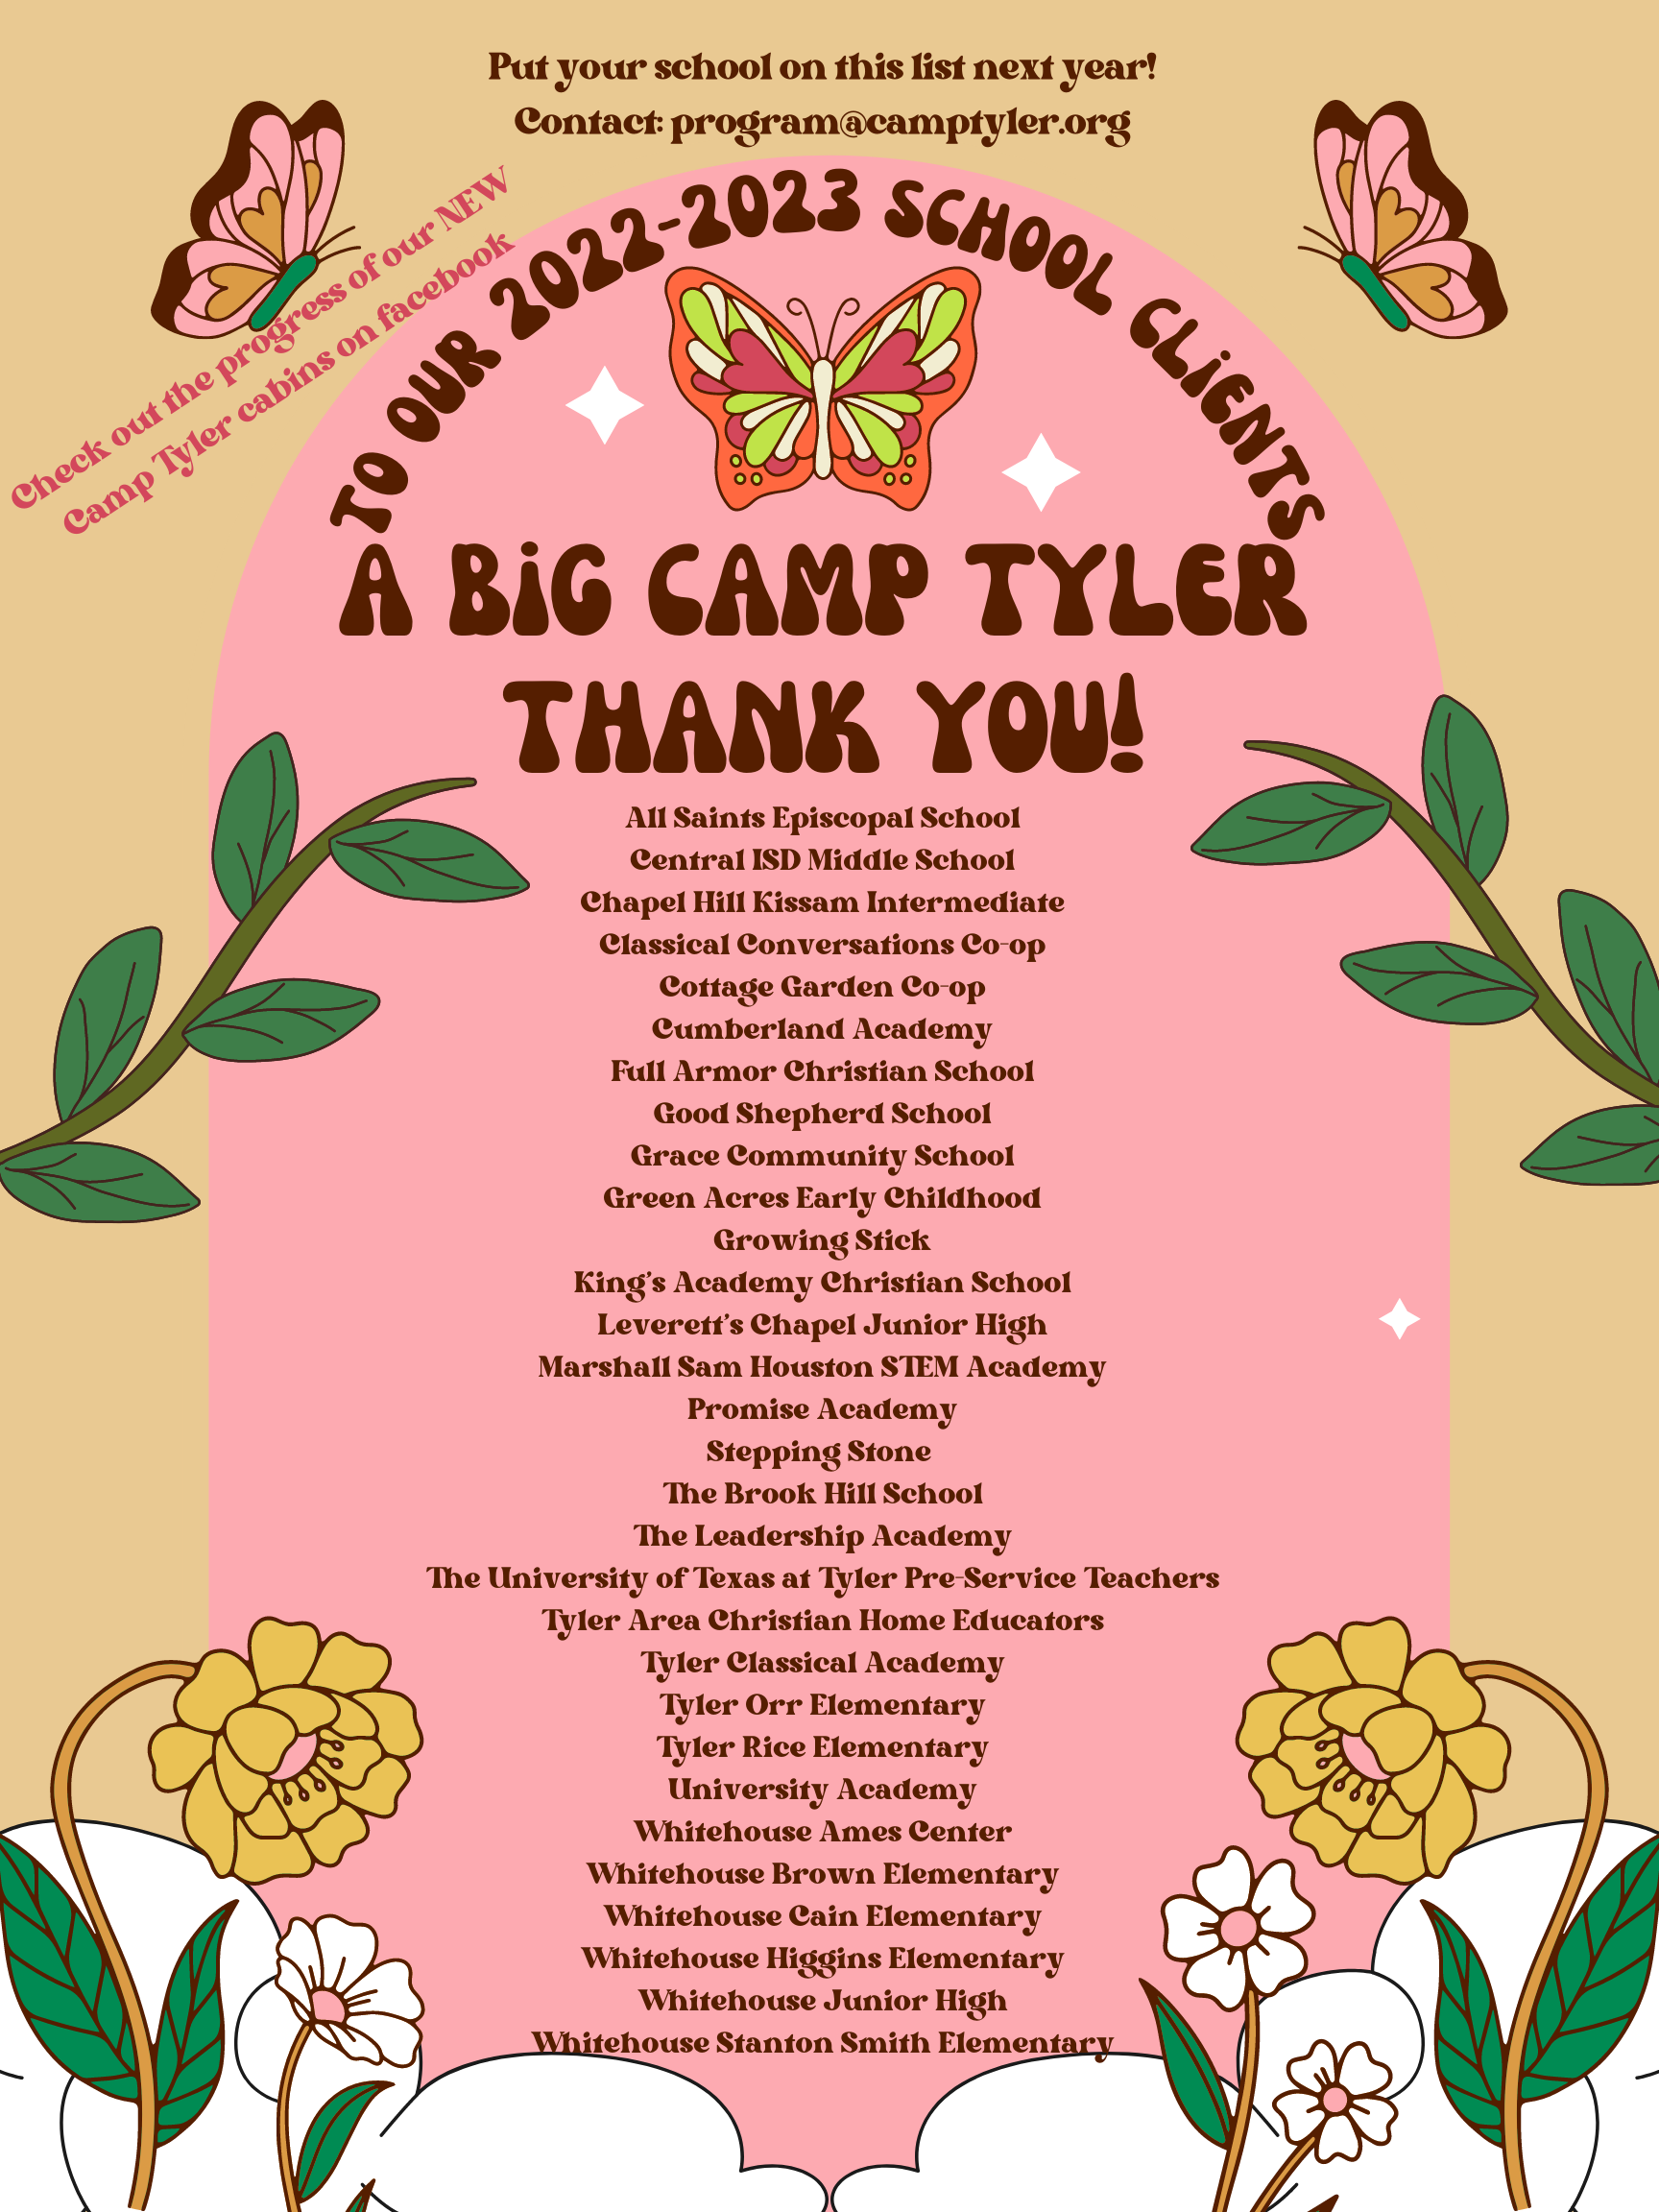 a big camp tyler thank you!